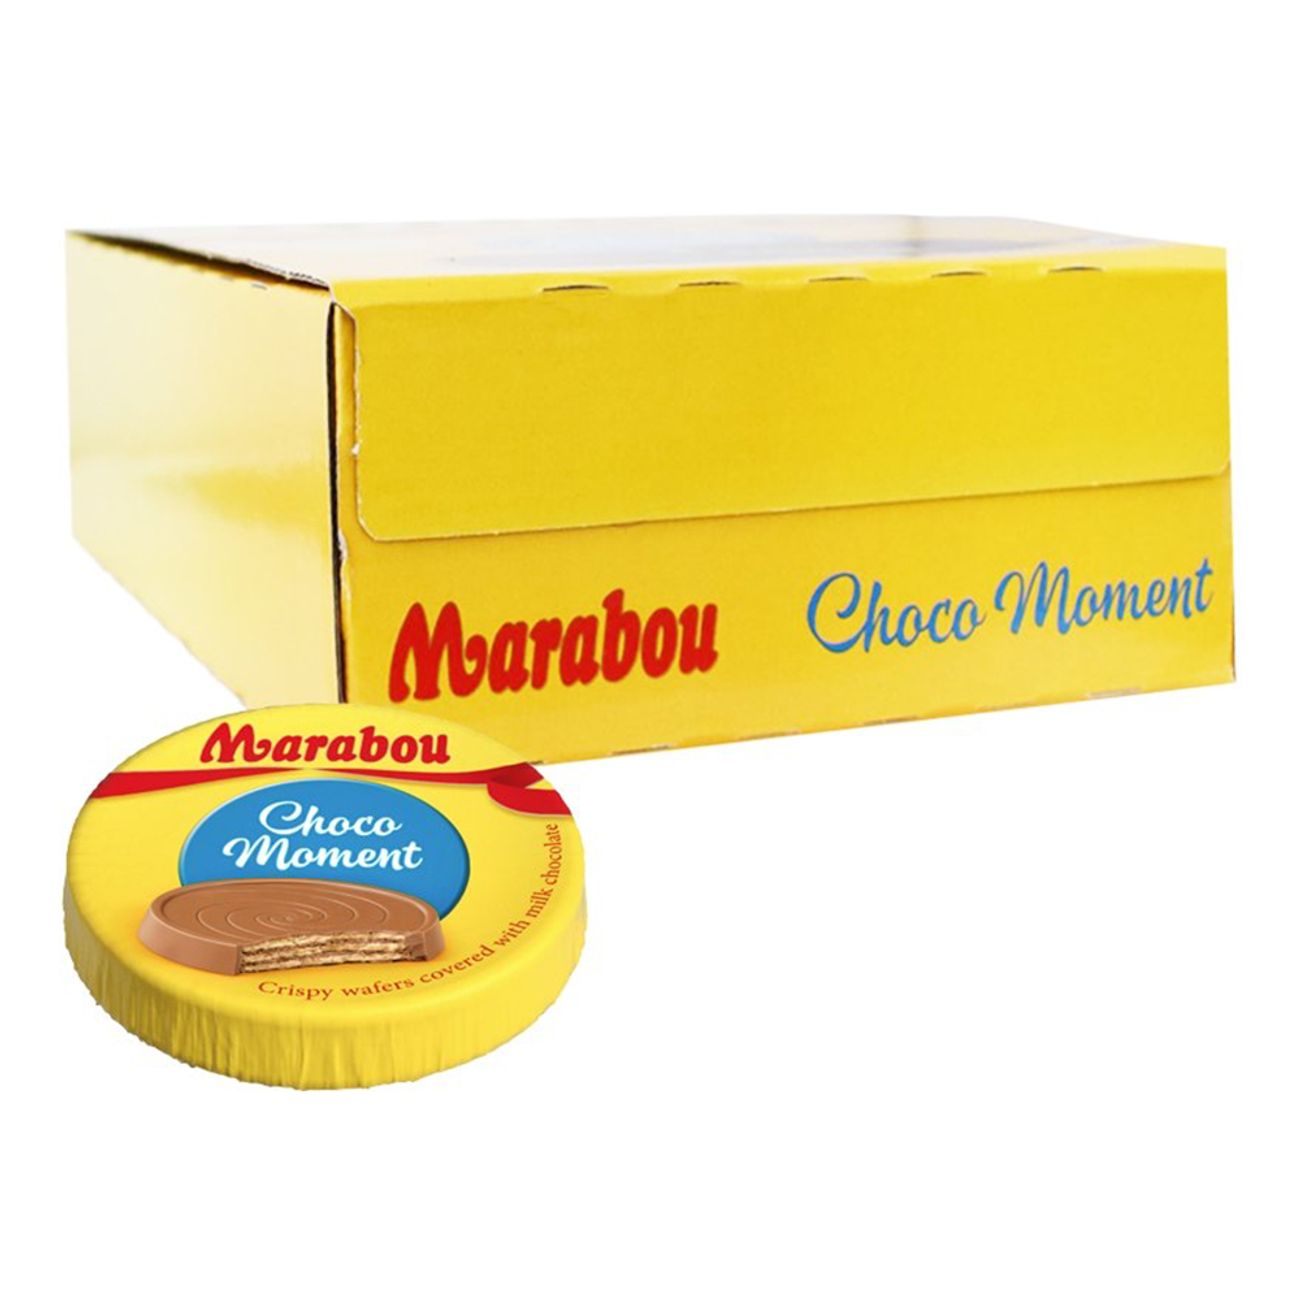 marabou-choco-moment-64626-2